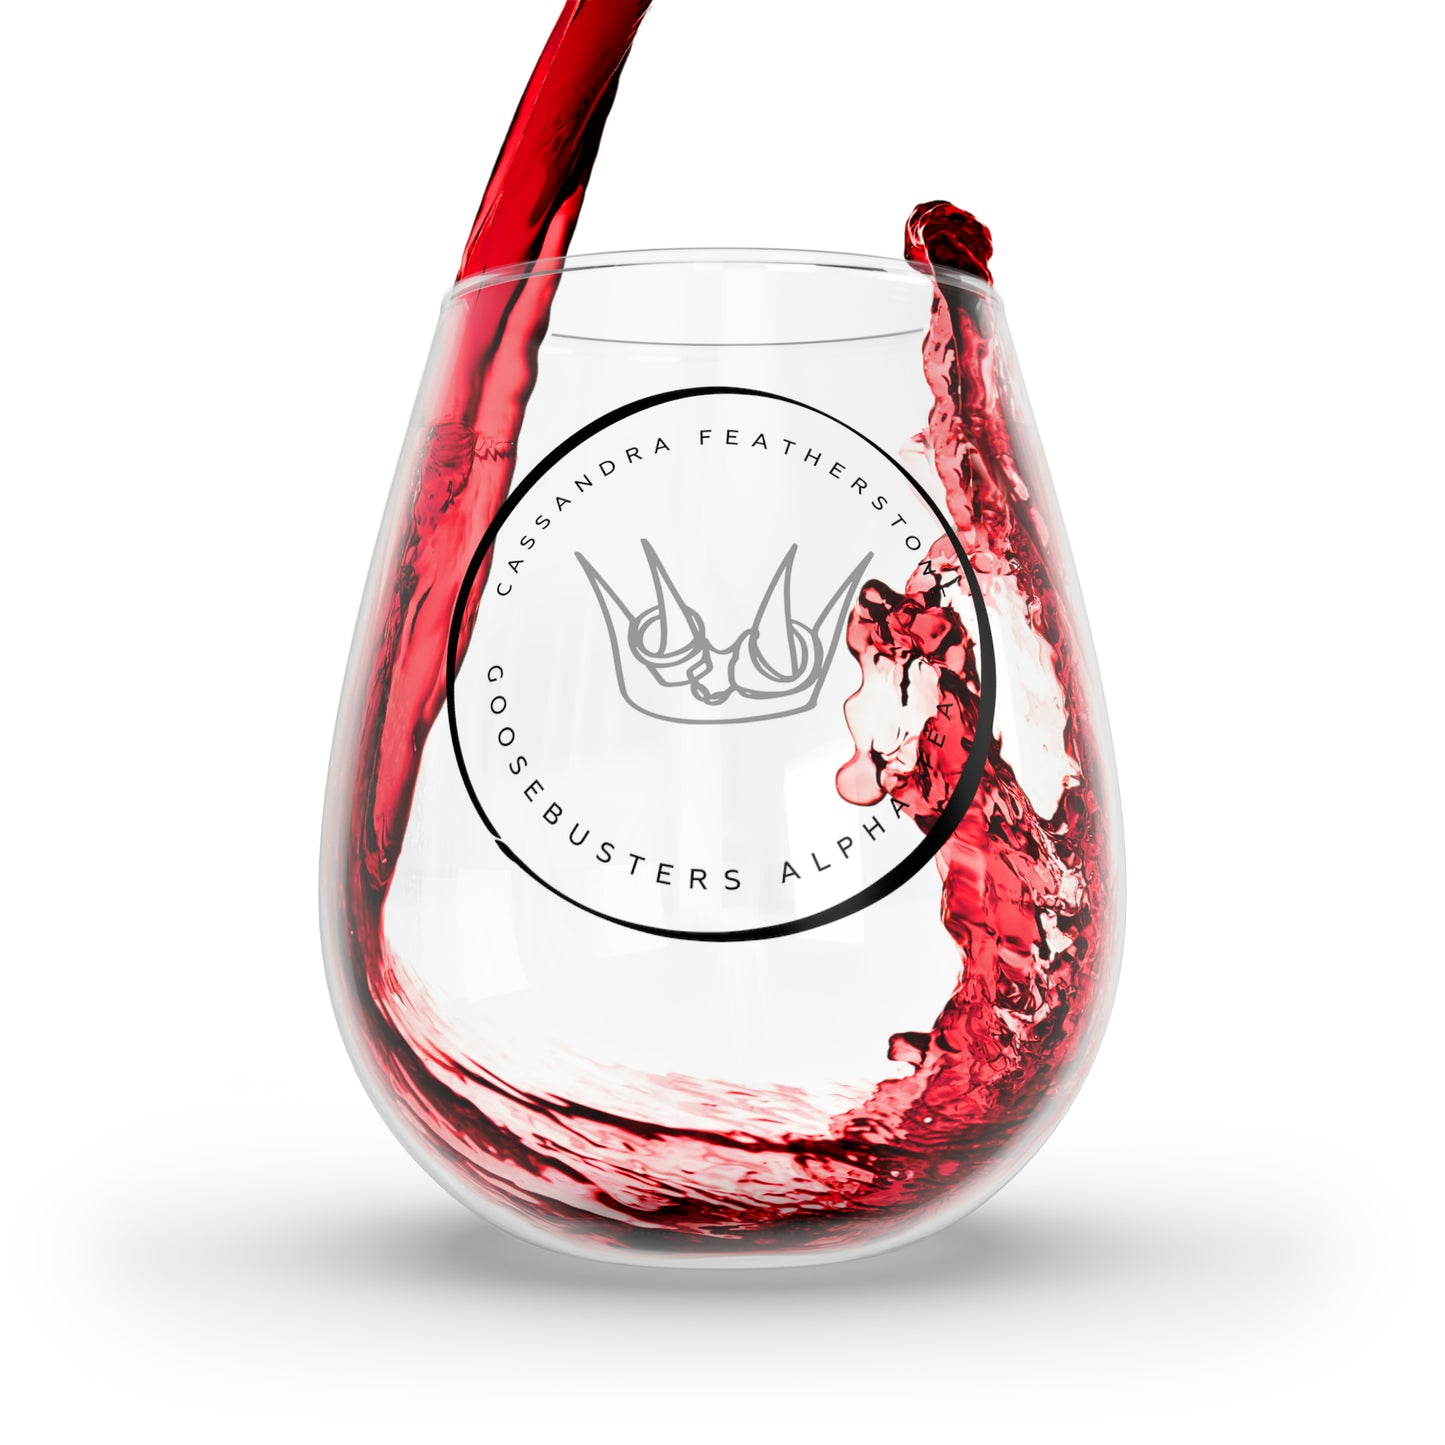 Goosebusters Alpha Team Stemless Wine Glass, 11.75oz